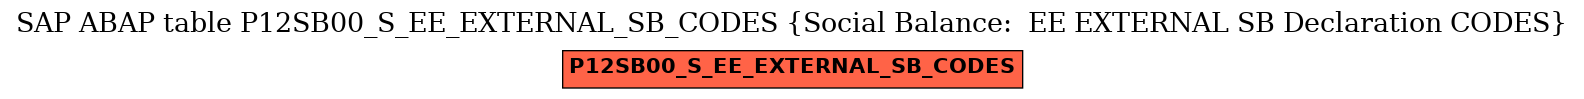 E-R Diagram for table P12SB00_S_EE_EXTERNAL_SB_CODES (Social Balance:  EE EXTERNAL SB Declaration CODES)